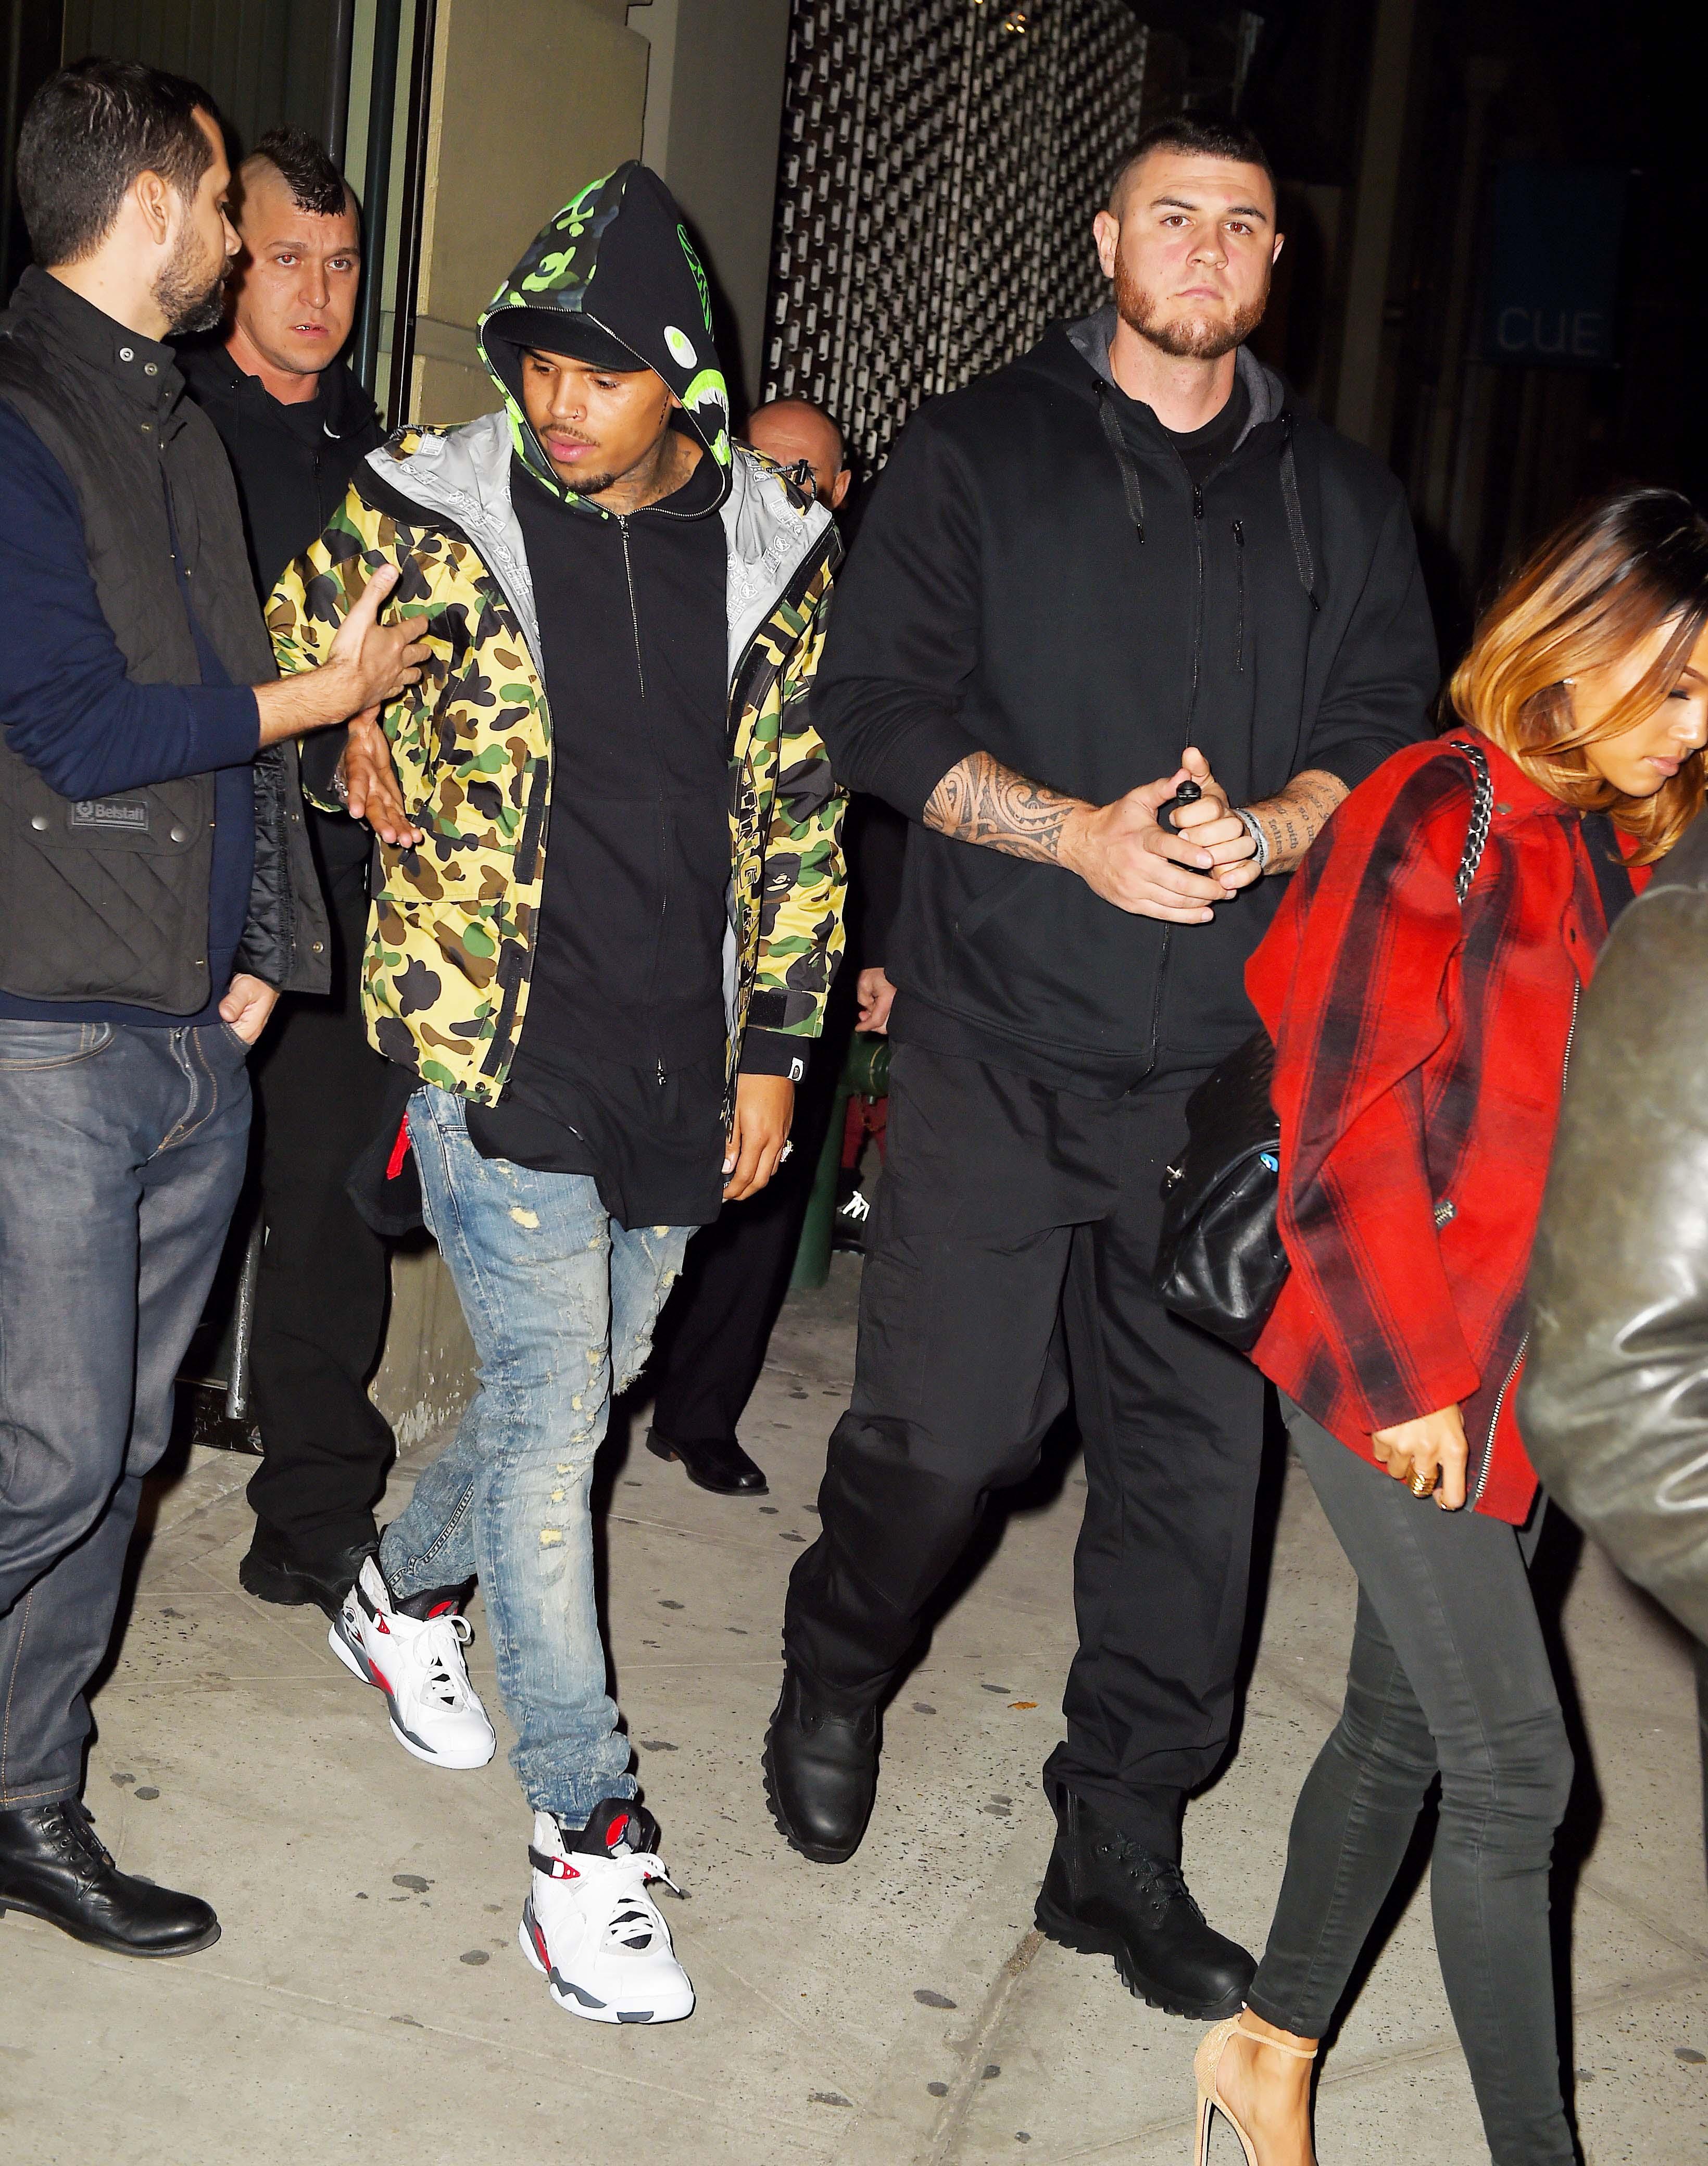 Chris Brown and girlfriend Karrueche Tran seen leaving an art gallery in Chelsea